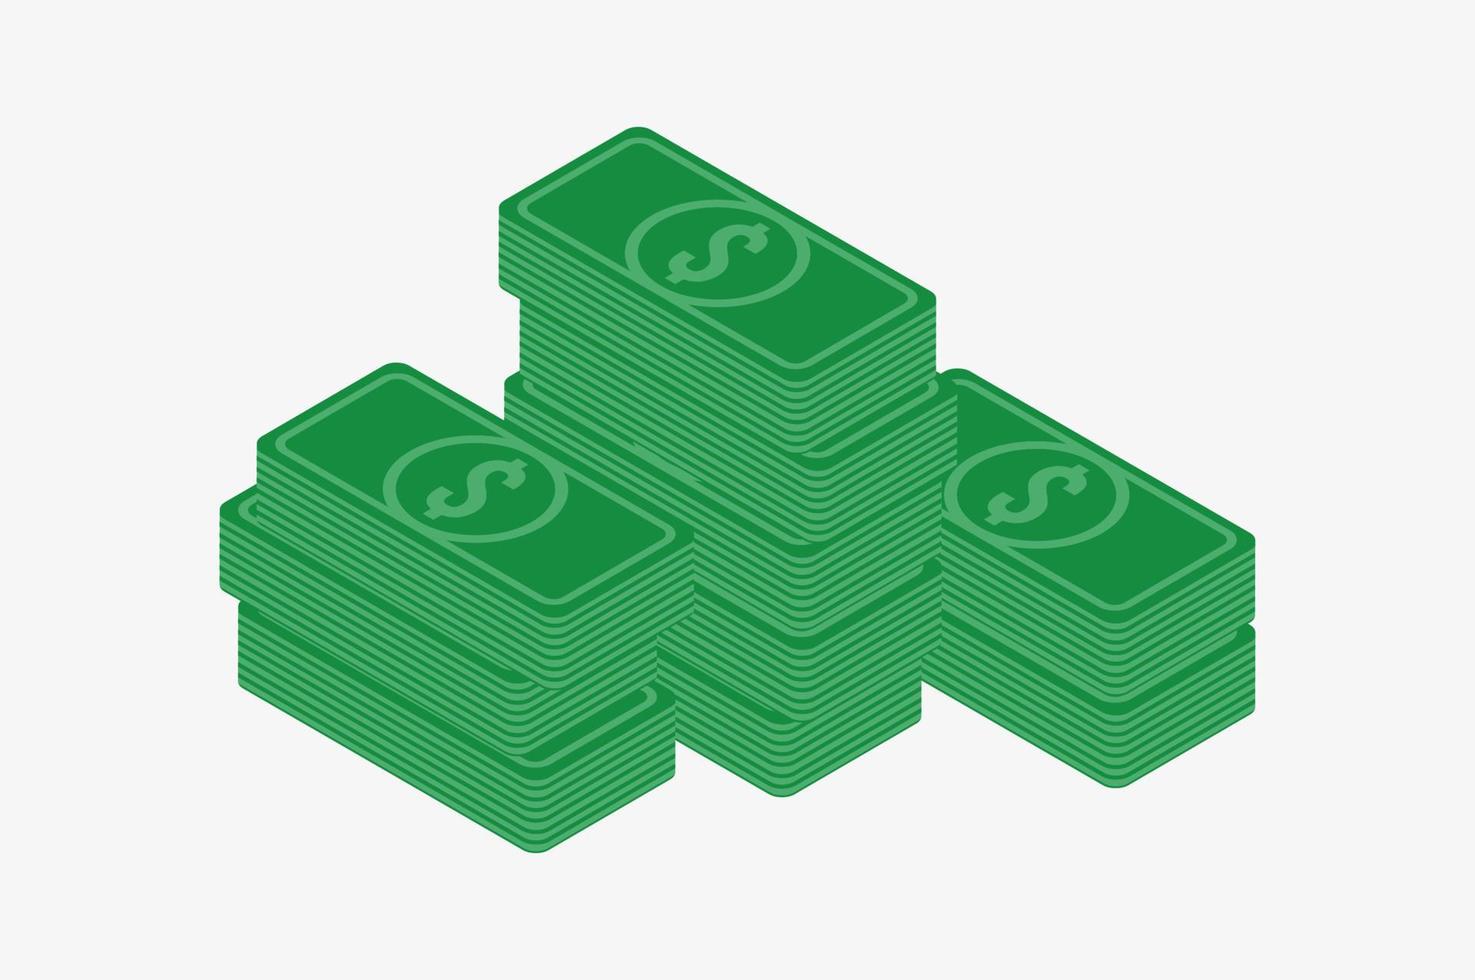 Isometric pile of cash. Vector illustration. Pile of money. Money icon in isometric style